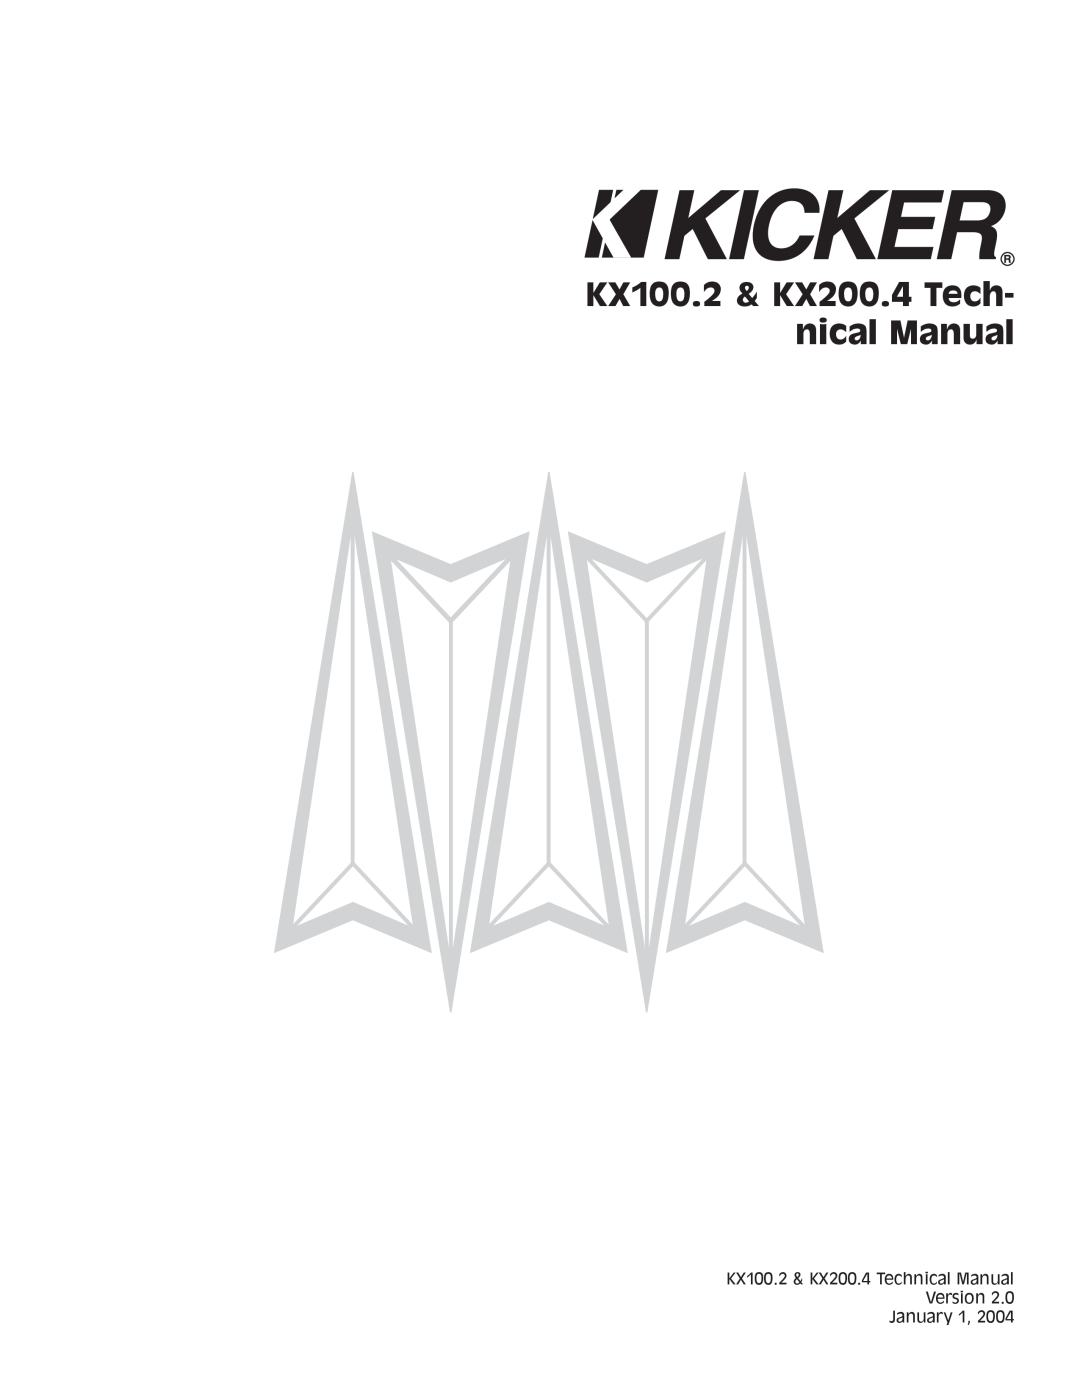 Kicker technical manual KX100.2 & KX200.4 Tech- nical Manual, KX100.2 & KX200.4 Technical Manual Version, January 